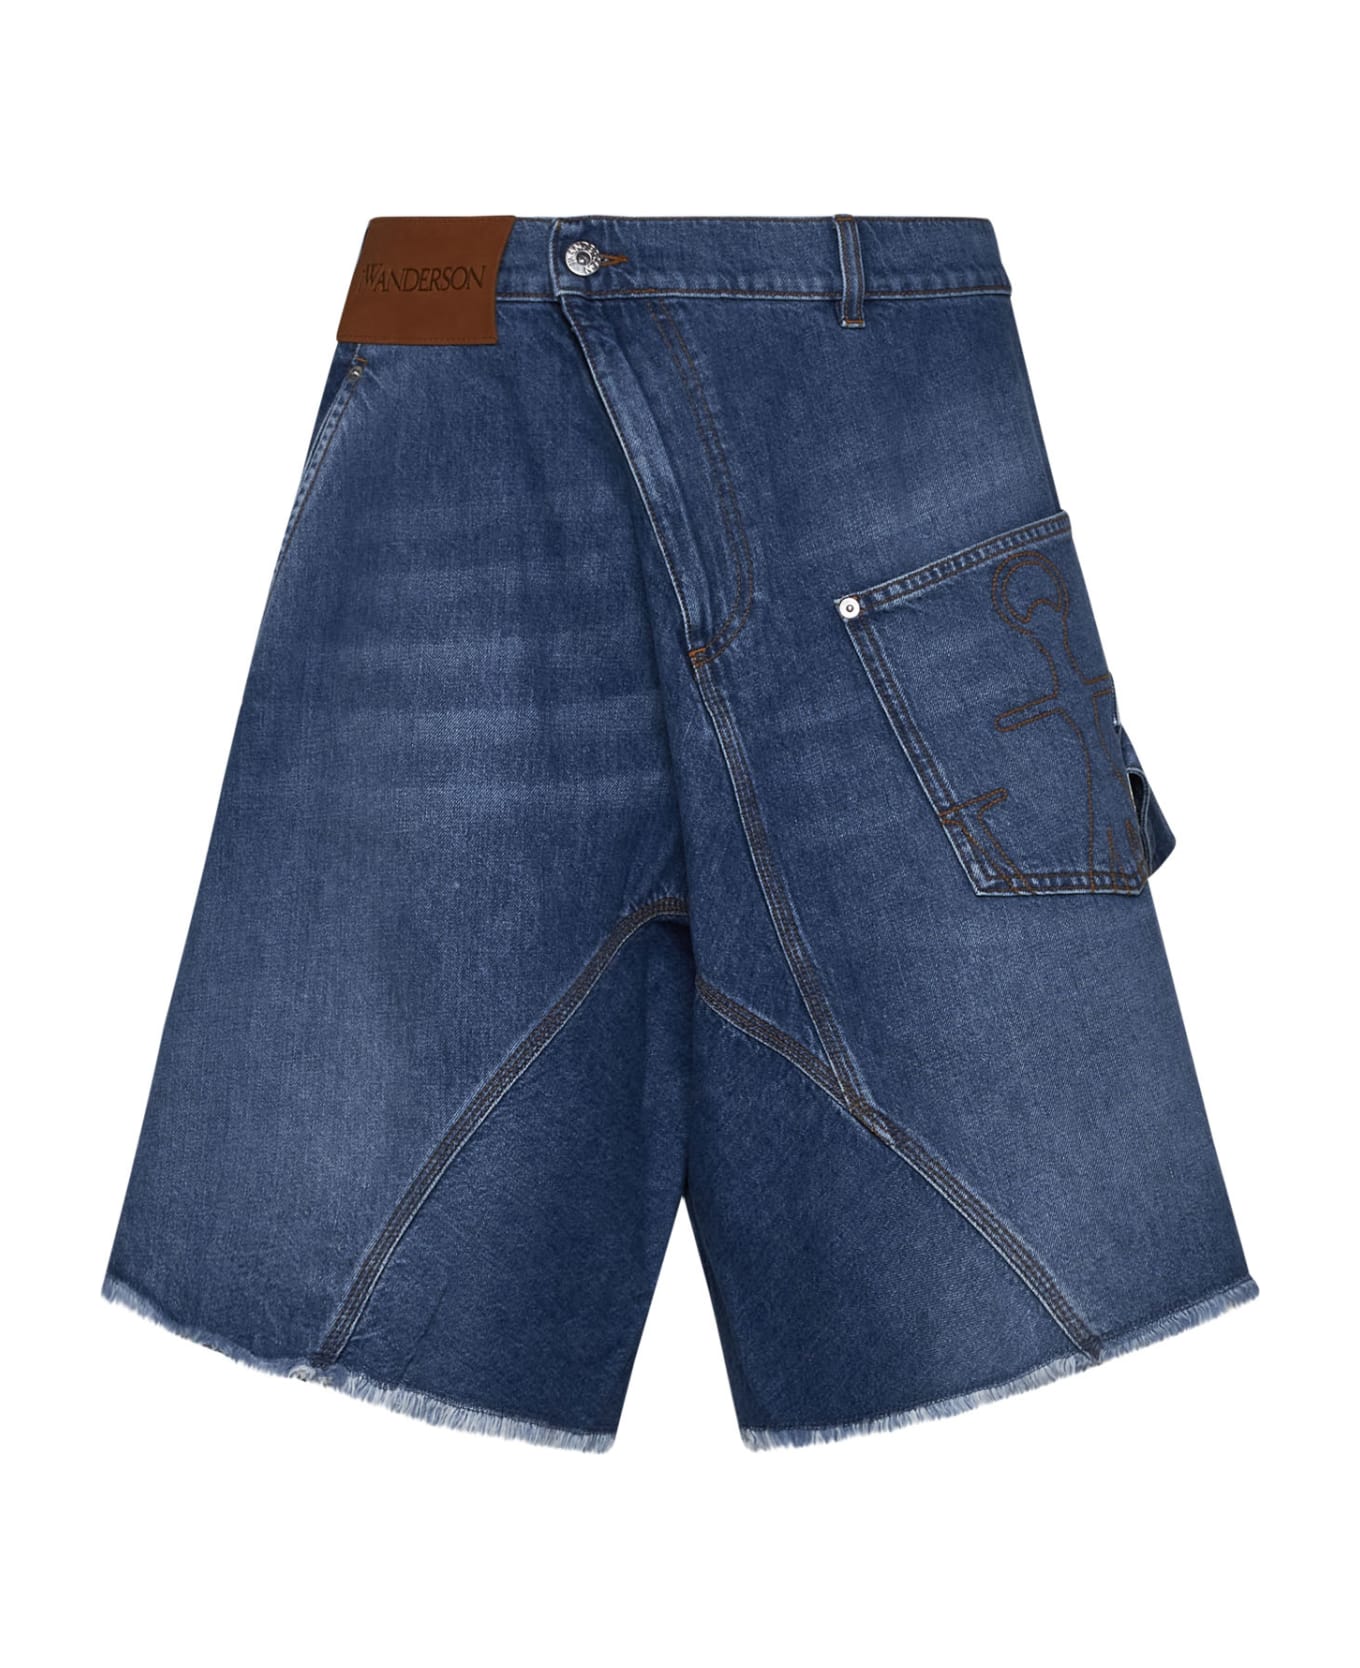 J.W. Anderson Shorts - Light blue denim